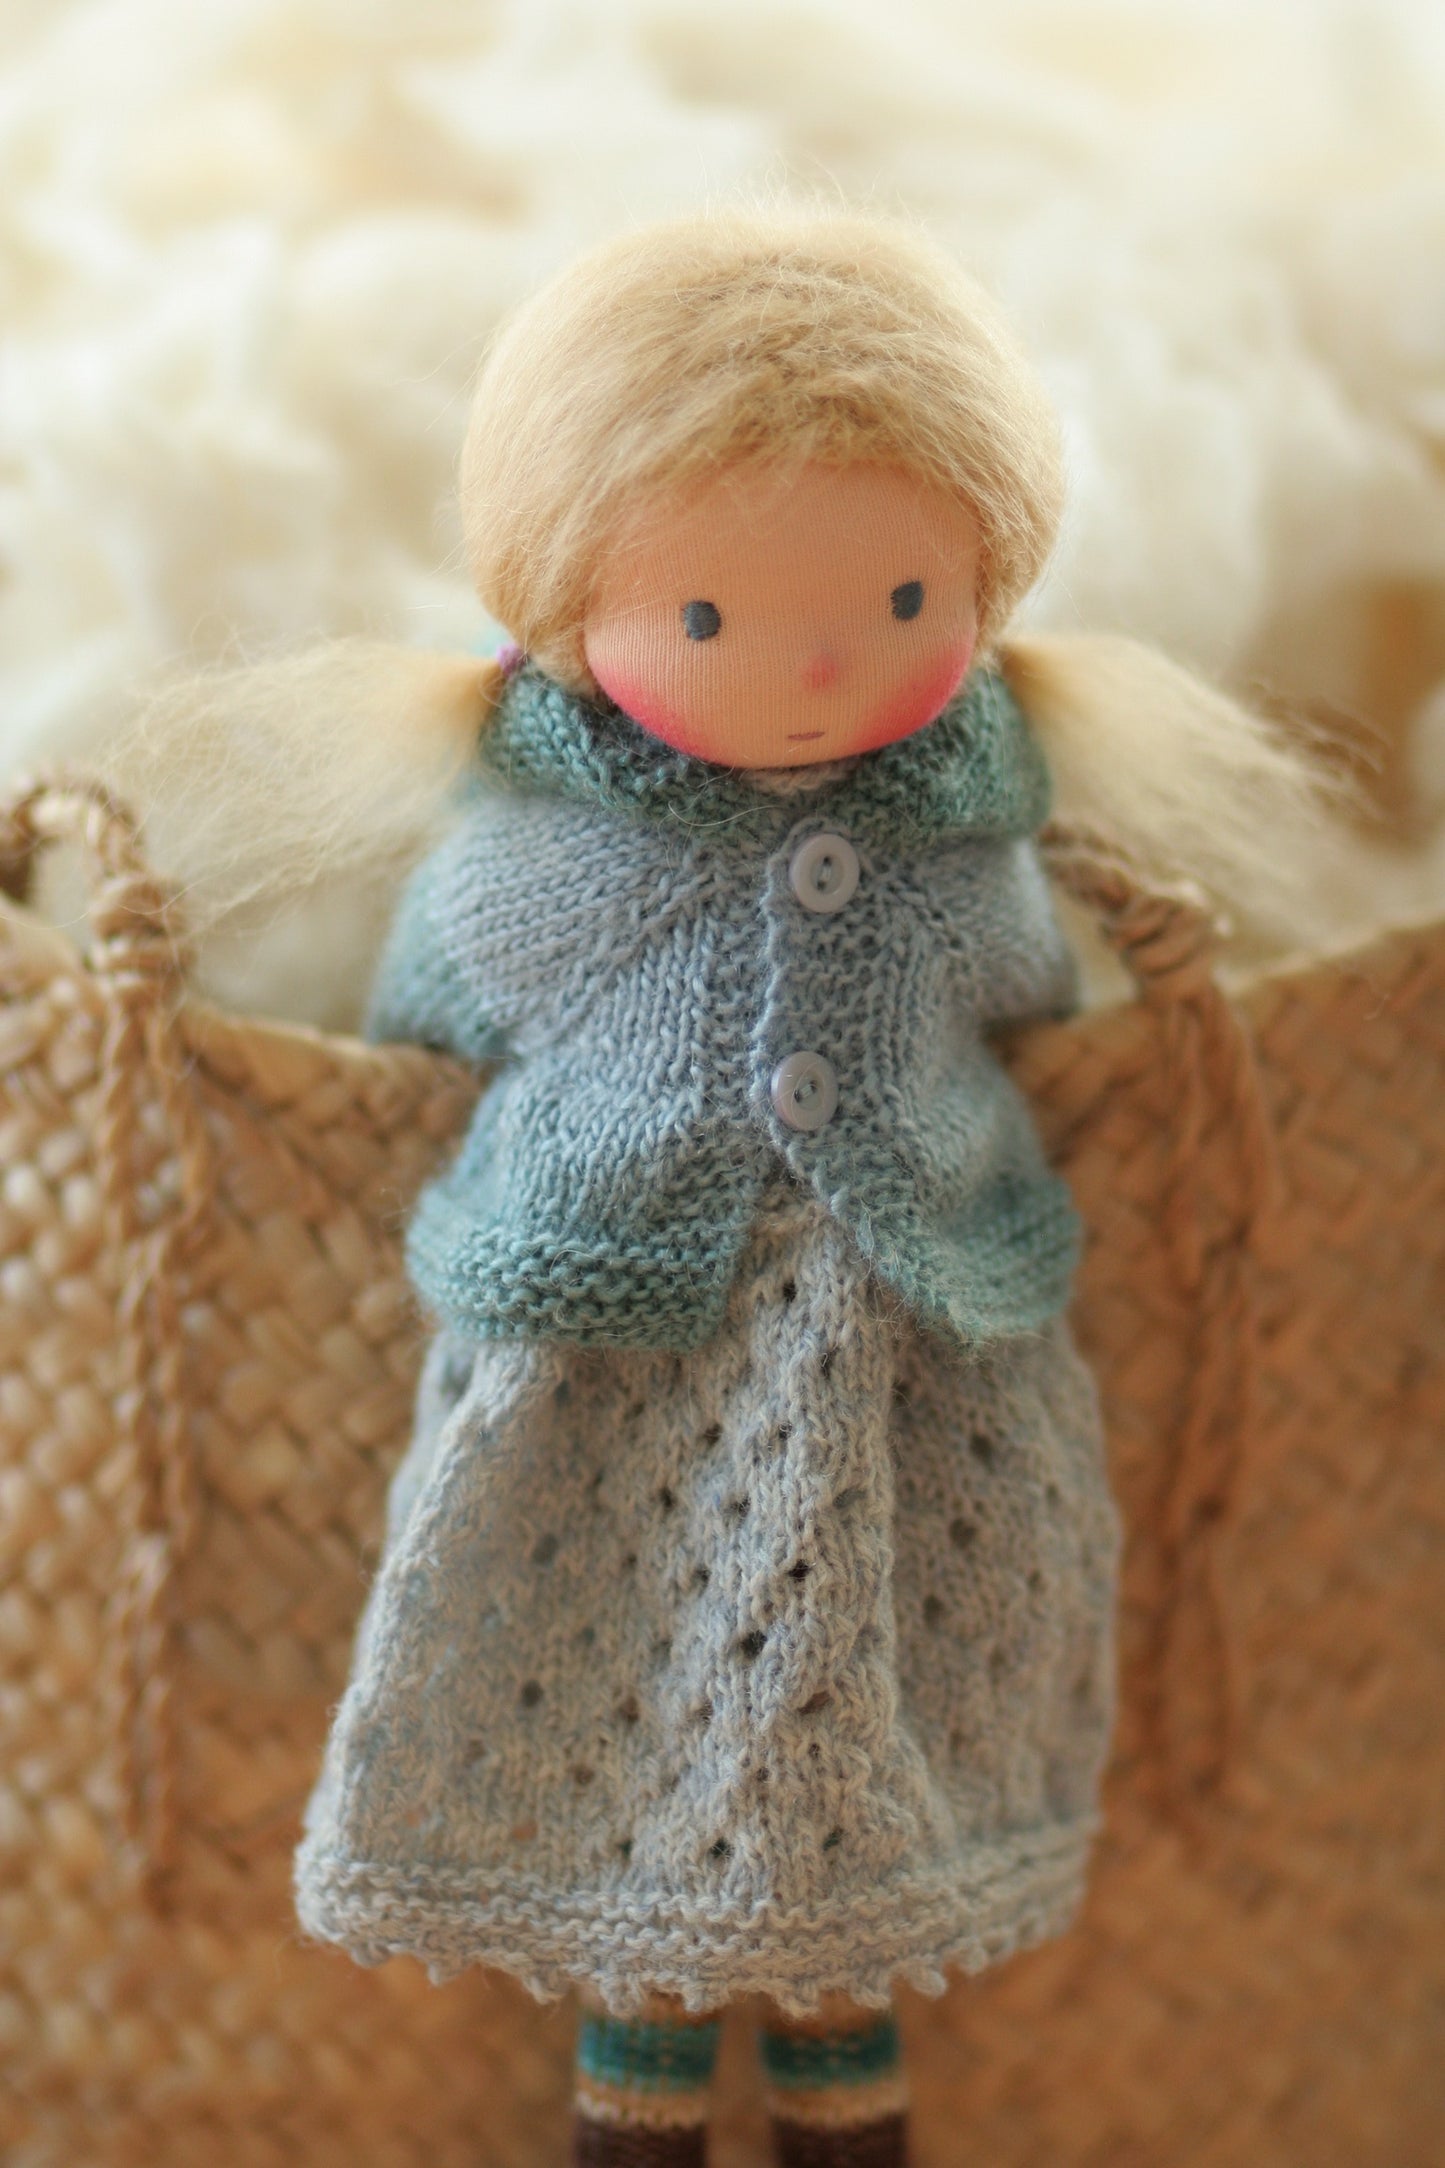 Kari - Peperuda doll, knitted 14” doll, Waldorf doll, art doll, soft doll, natural doll, puppen, handmade doll